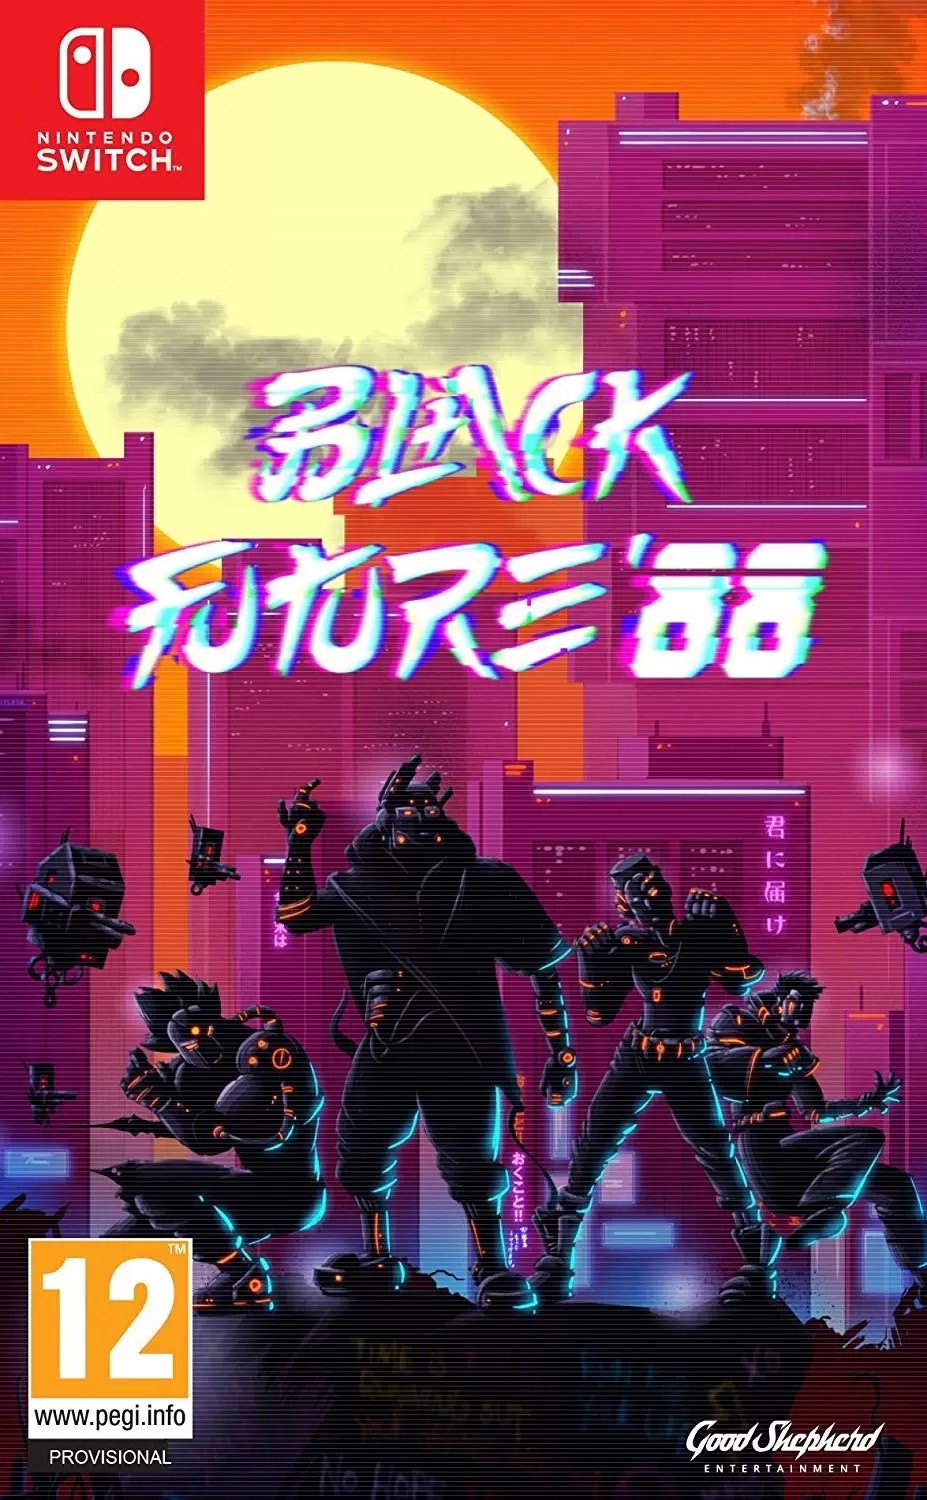 Nintendo Switch Games - Black Future \'88